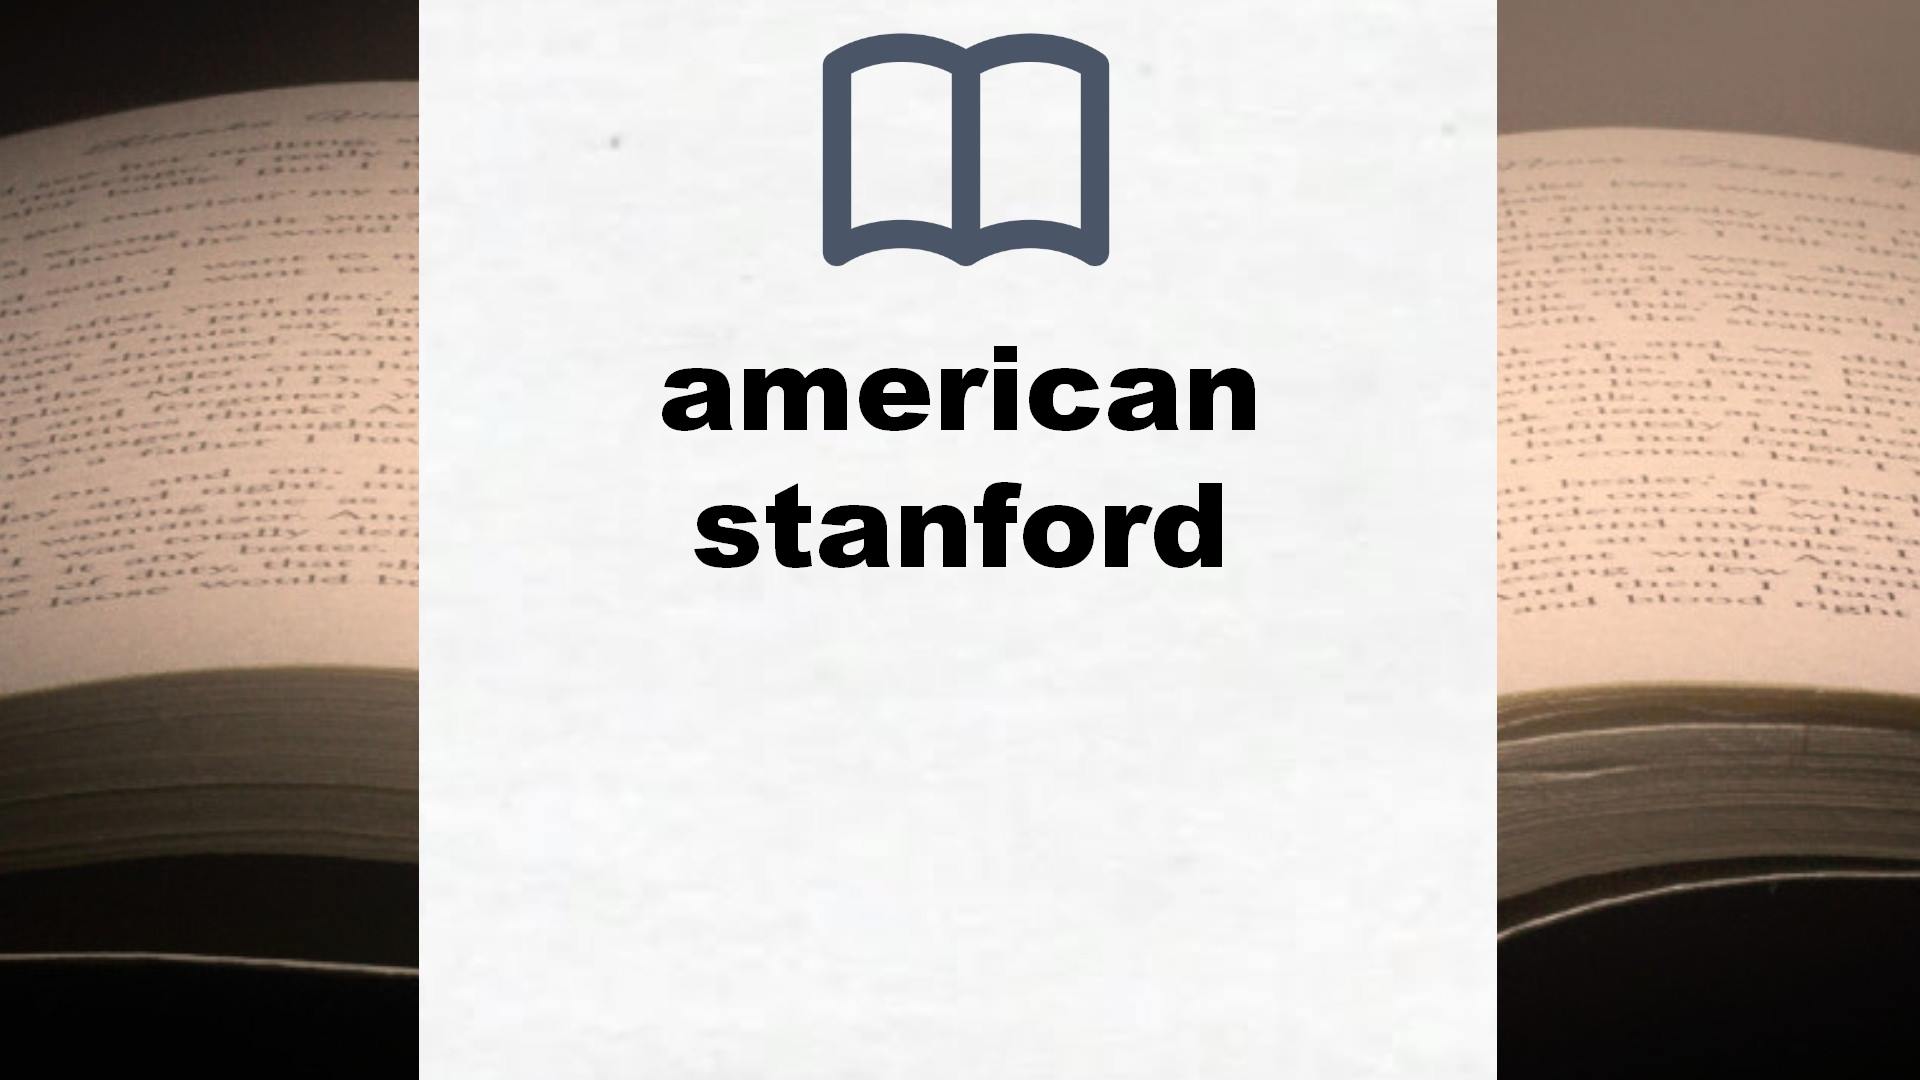 Libros sobre american stanford